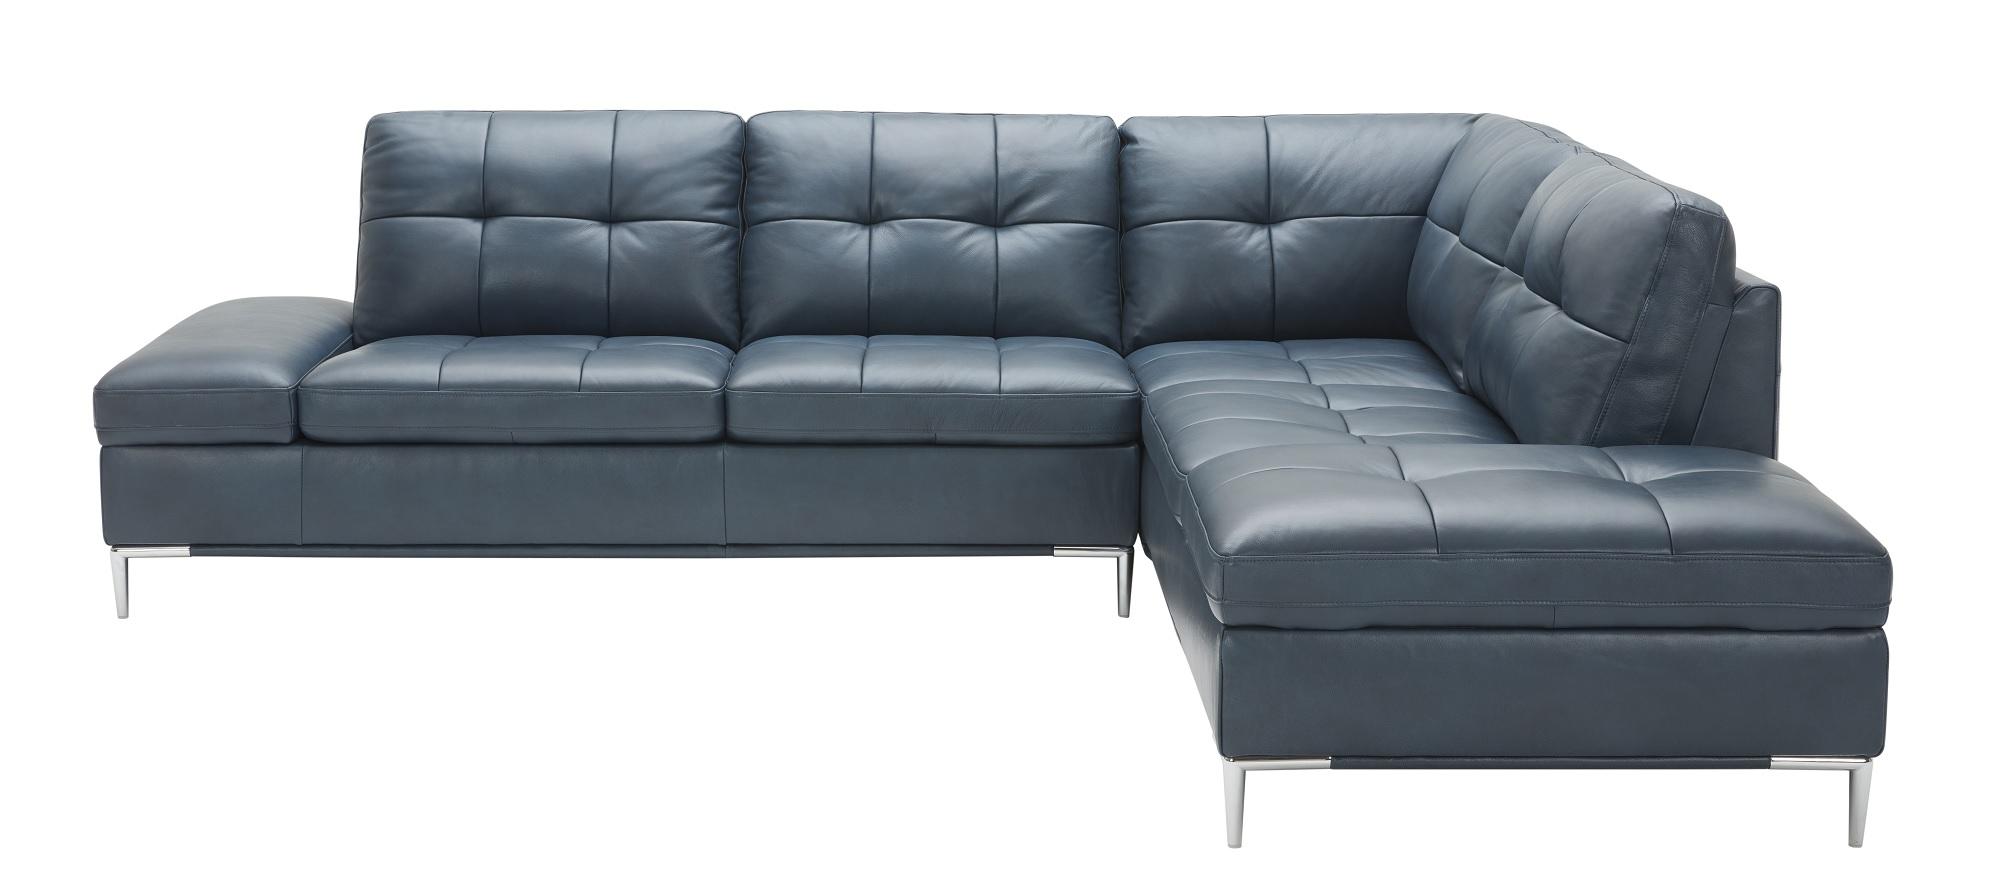 Contemporary Sectional Sofa Leonardo SKU 18995 in Blue Leather